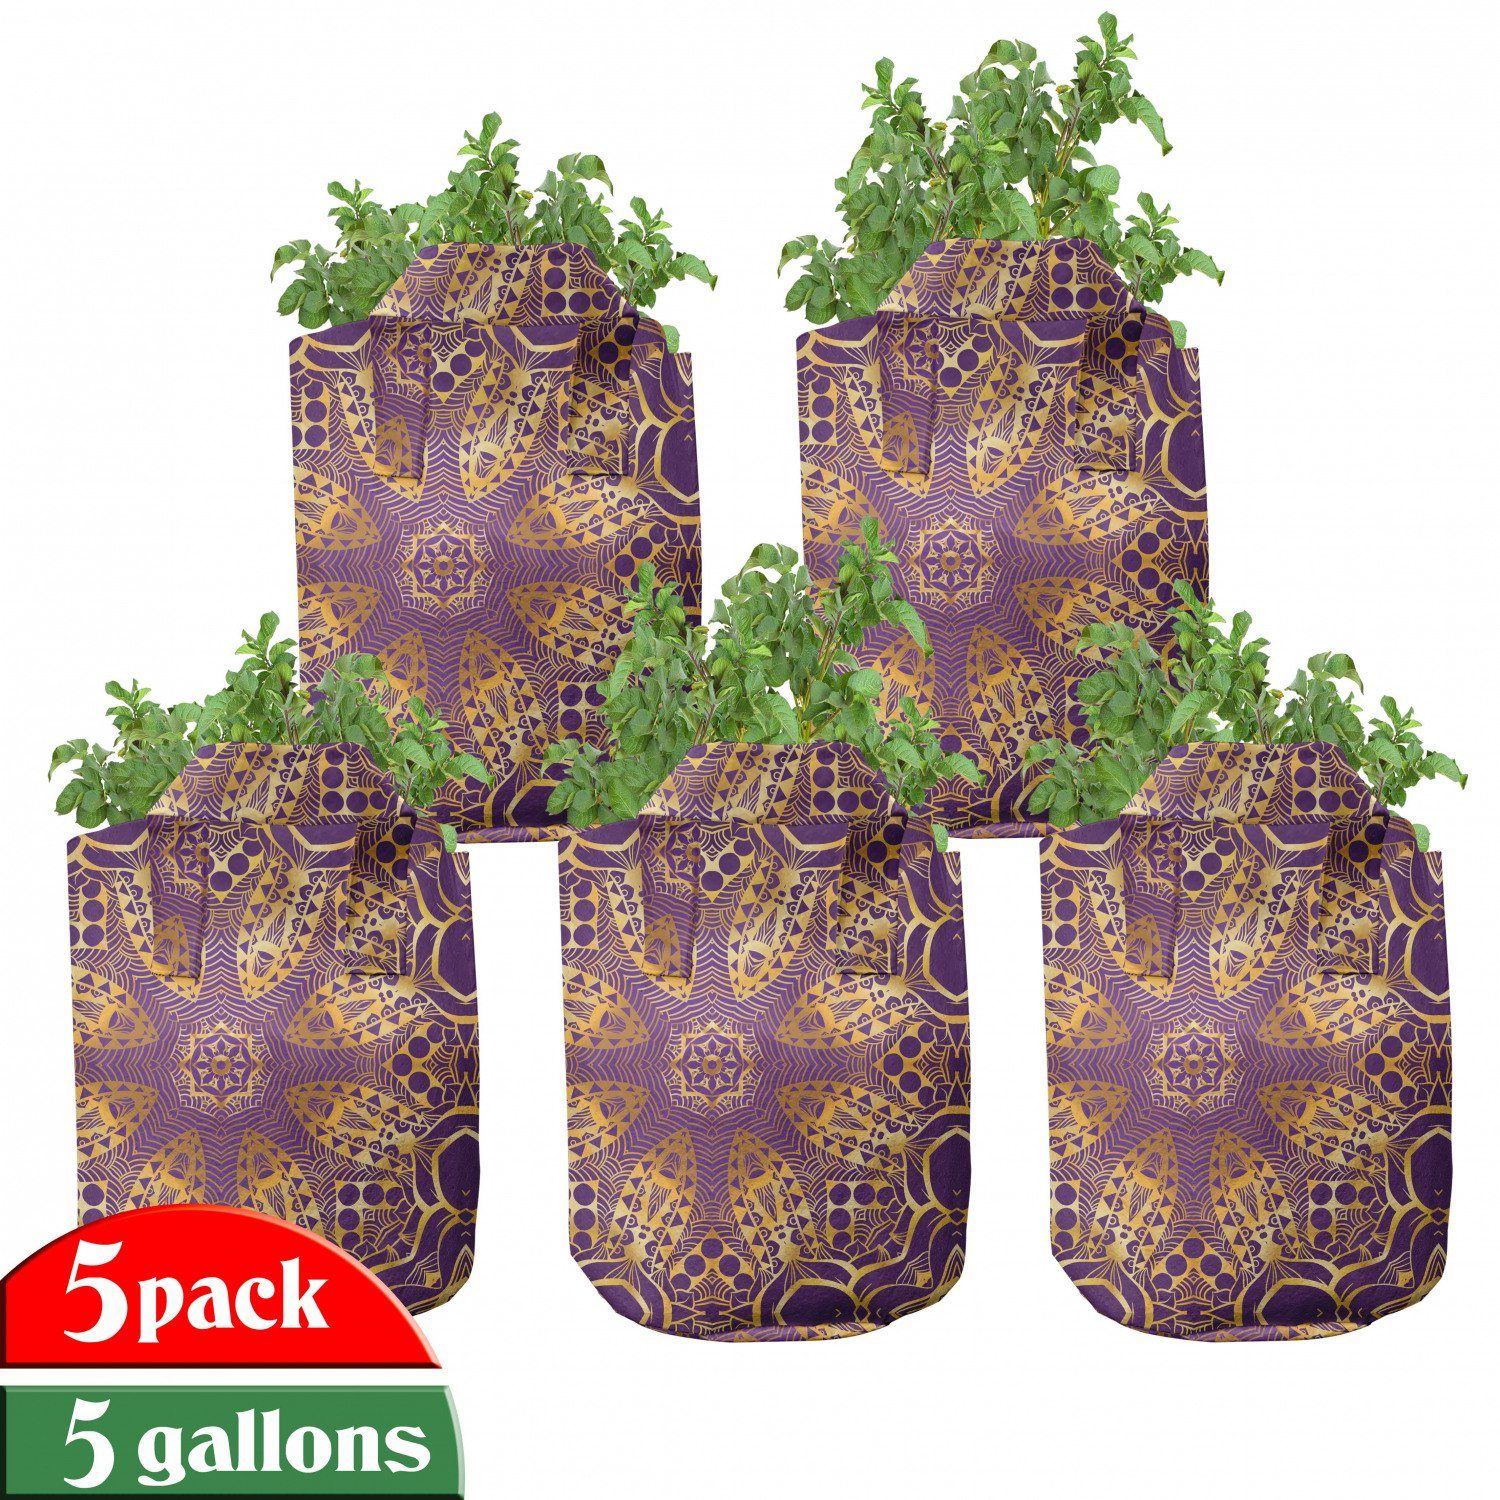 Abakuhaus Pflanzkübel hochleistungsfähig Stofftöpfe mit Griffen für Pflanzen, lila Mandala Boho-Motiv